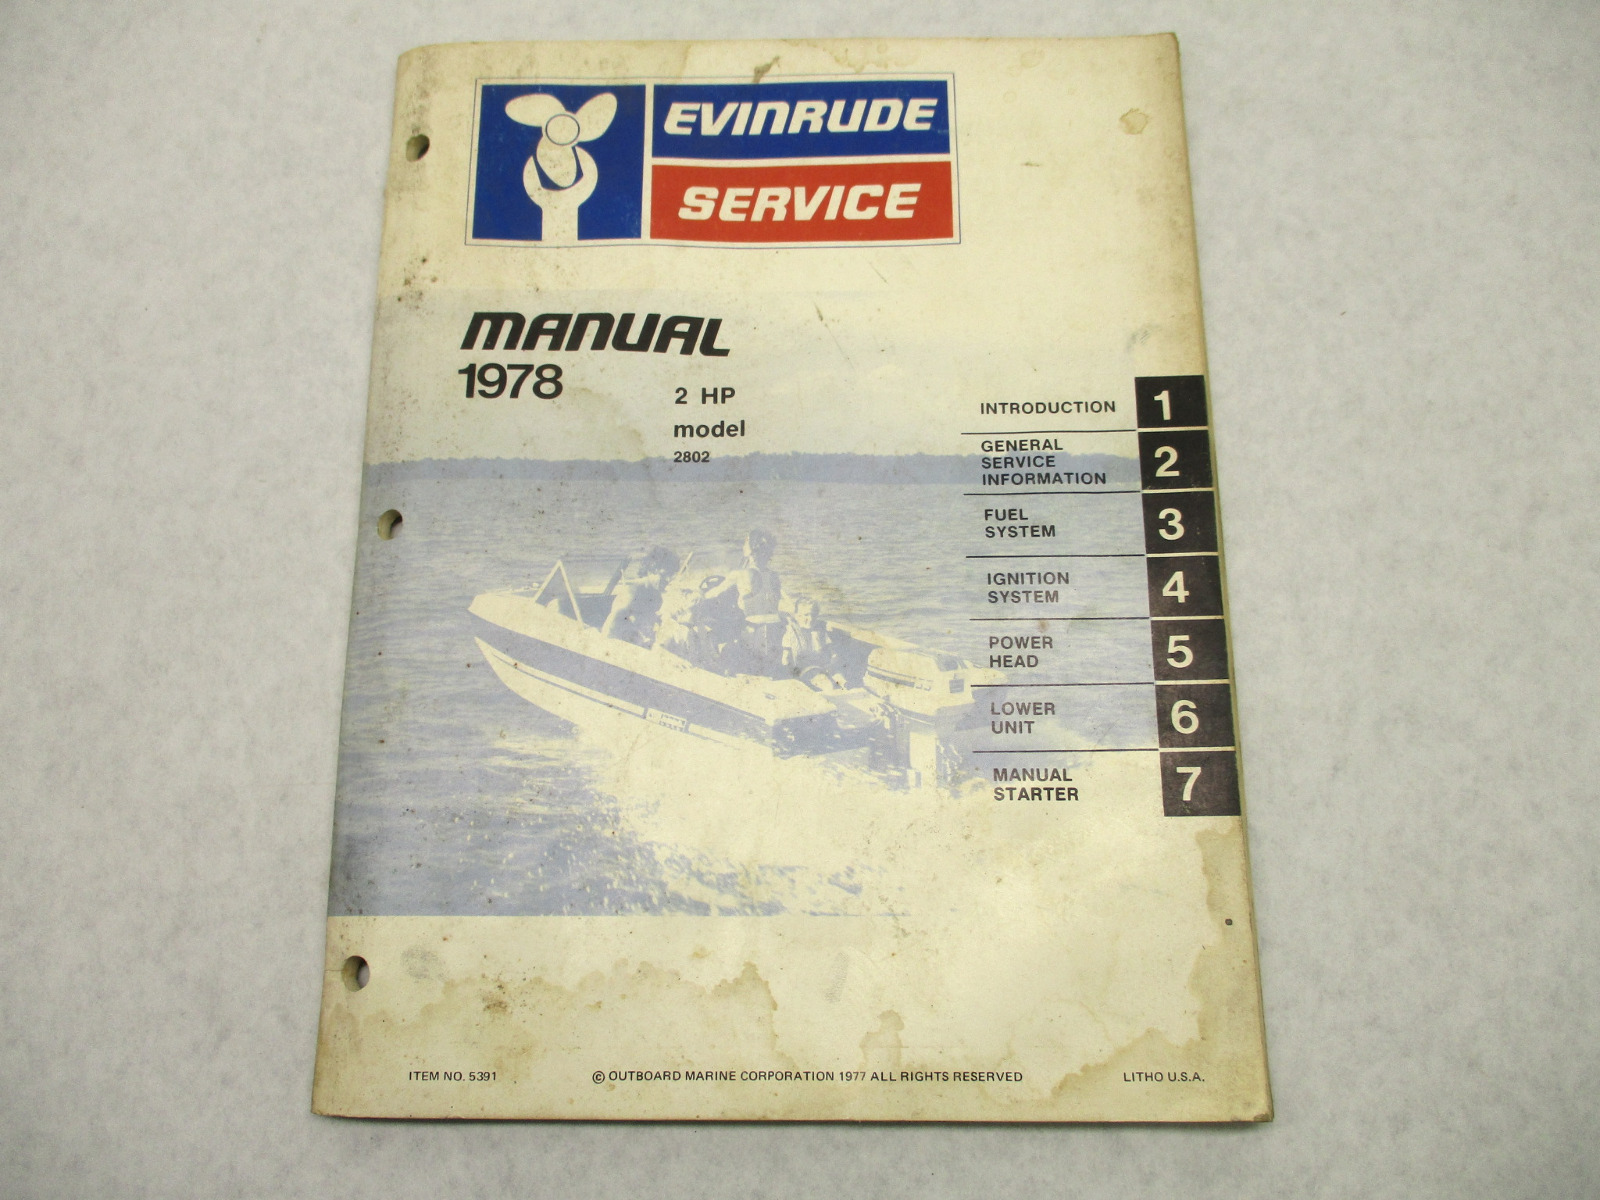 1978 Evinrude Outboard Service Repair Manual 2 HP 2802